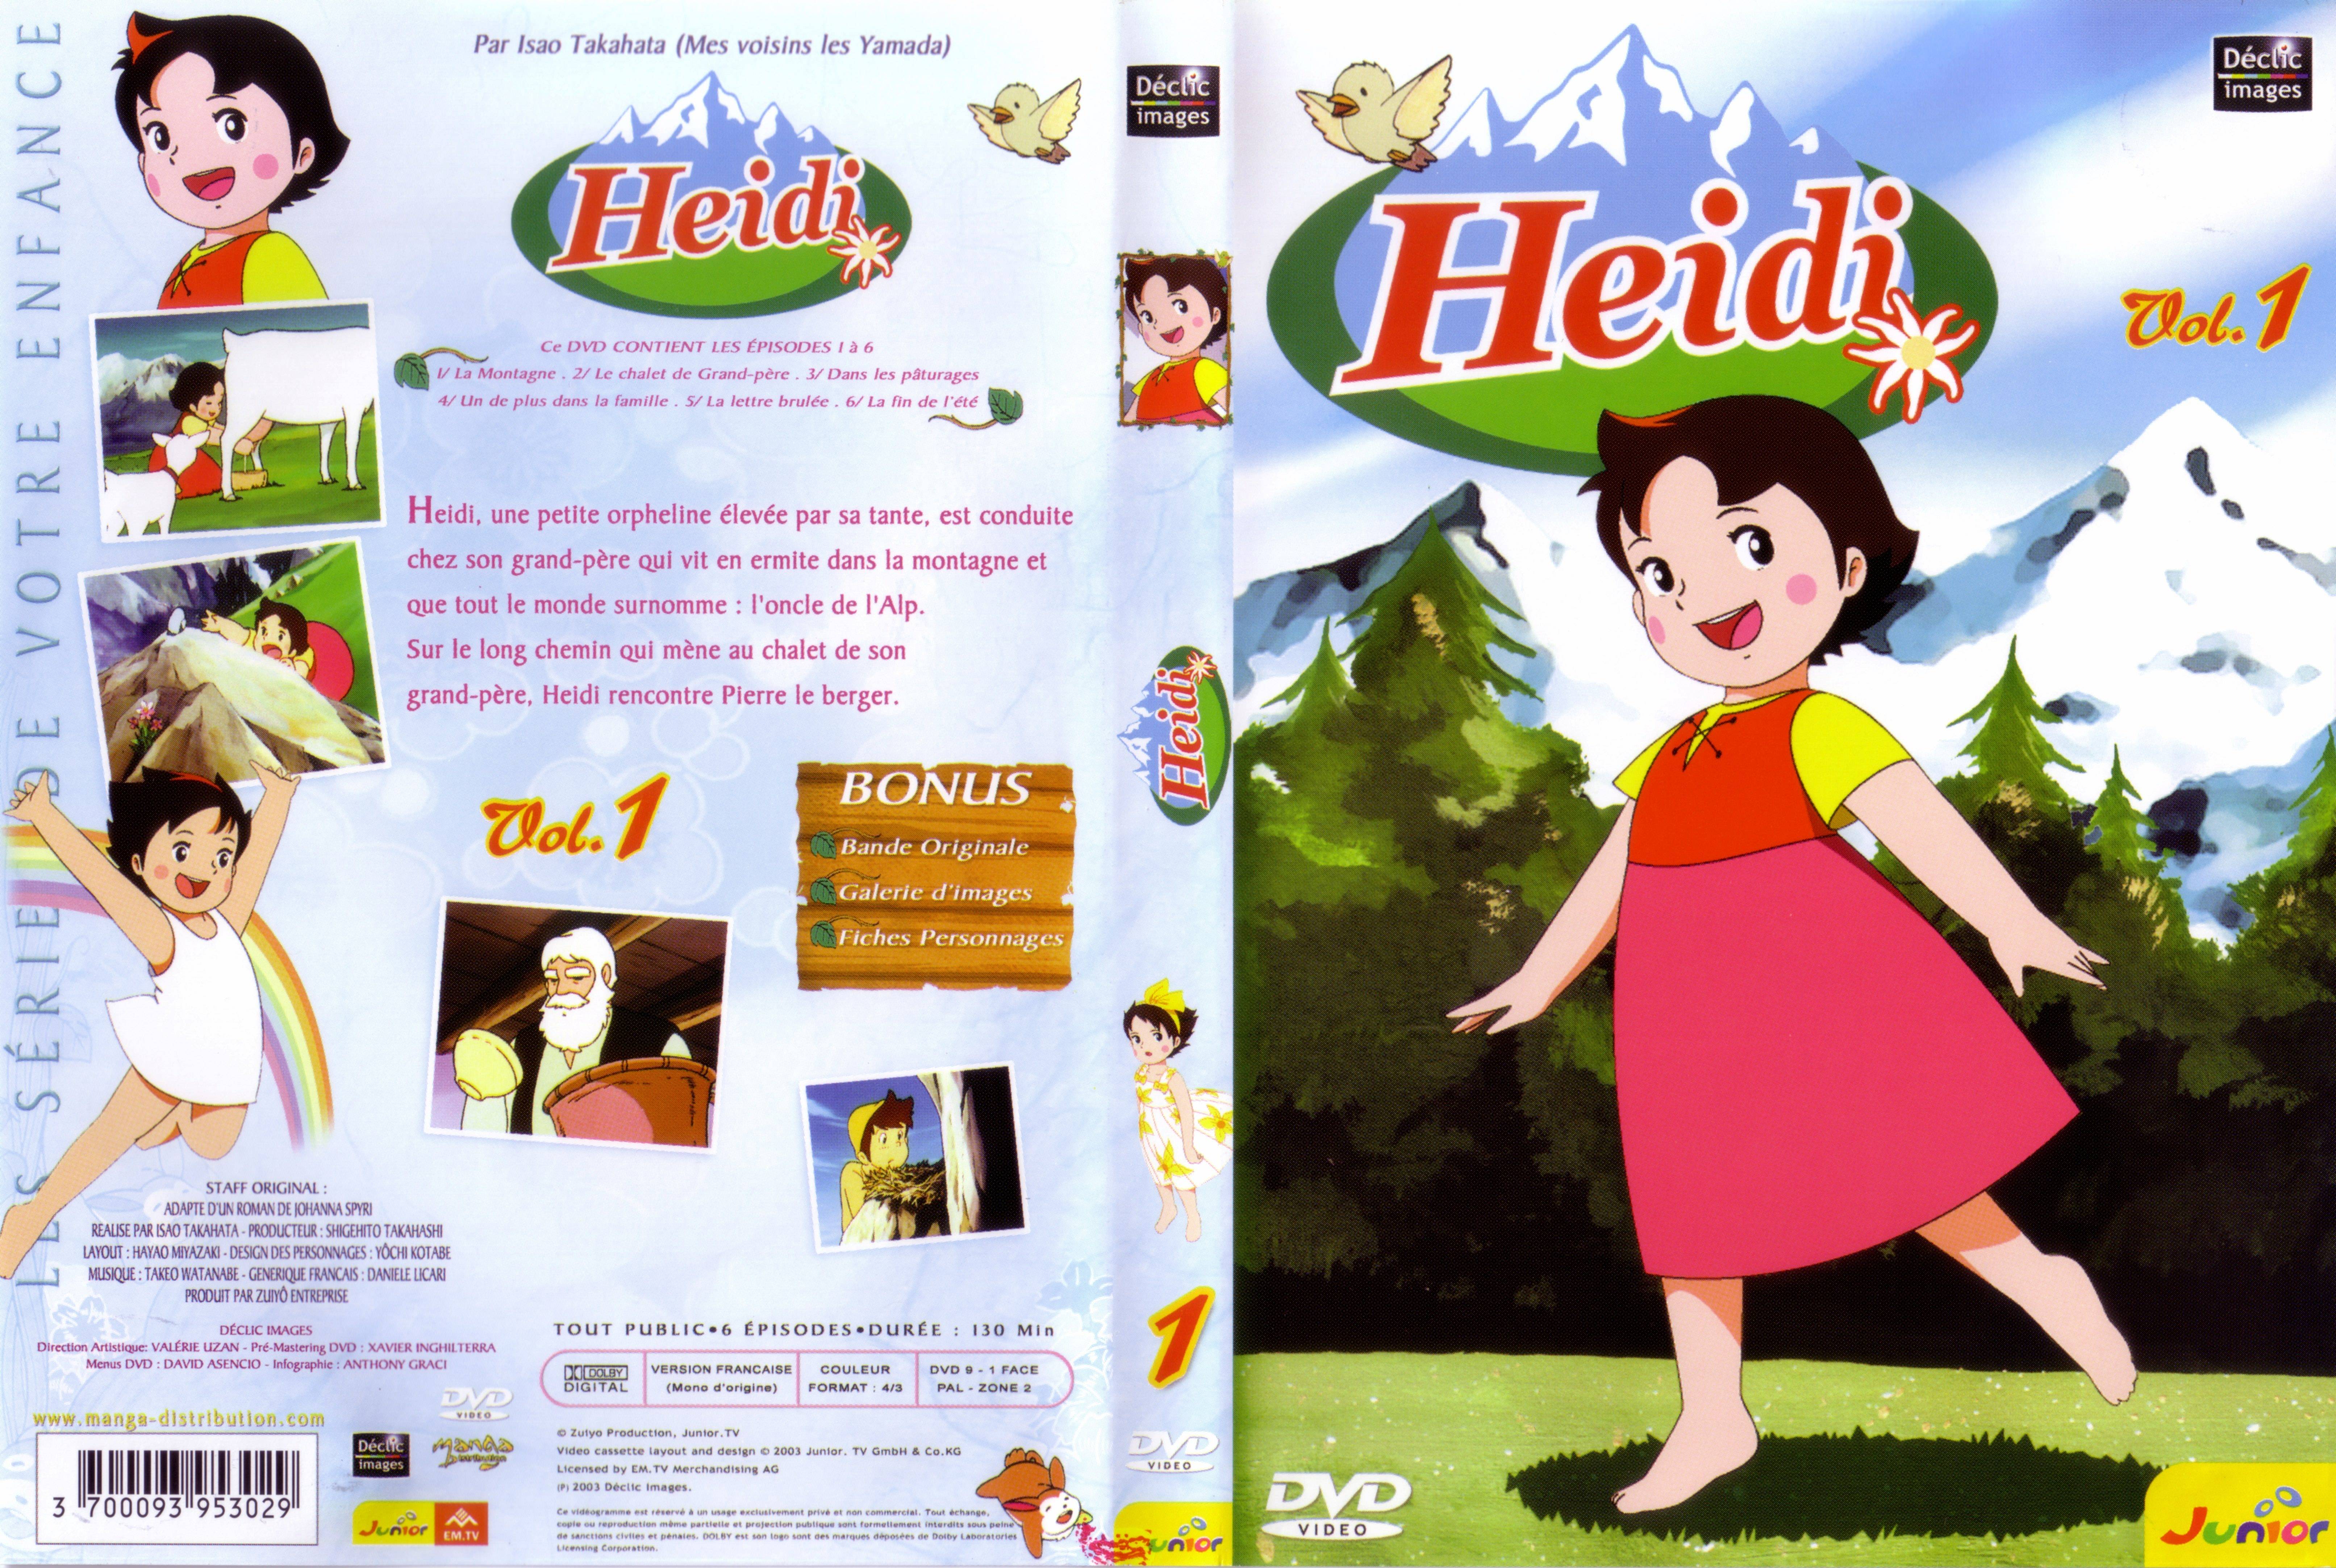 Jaquette DVD Heidi DVD 01